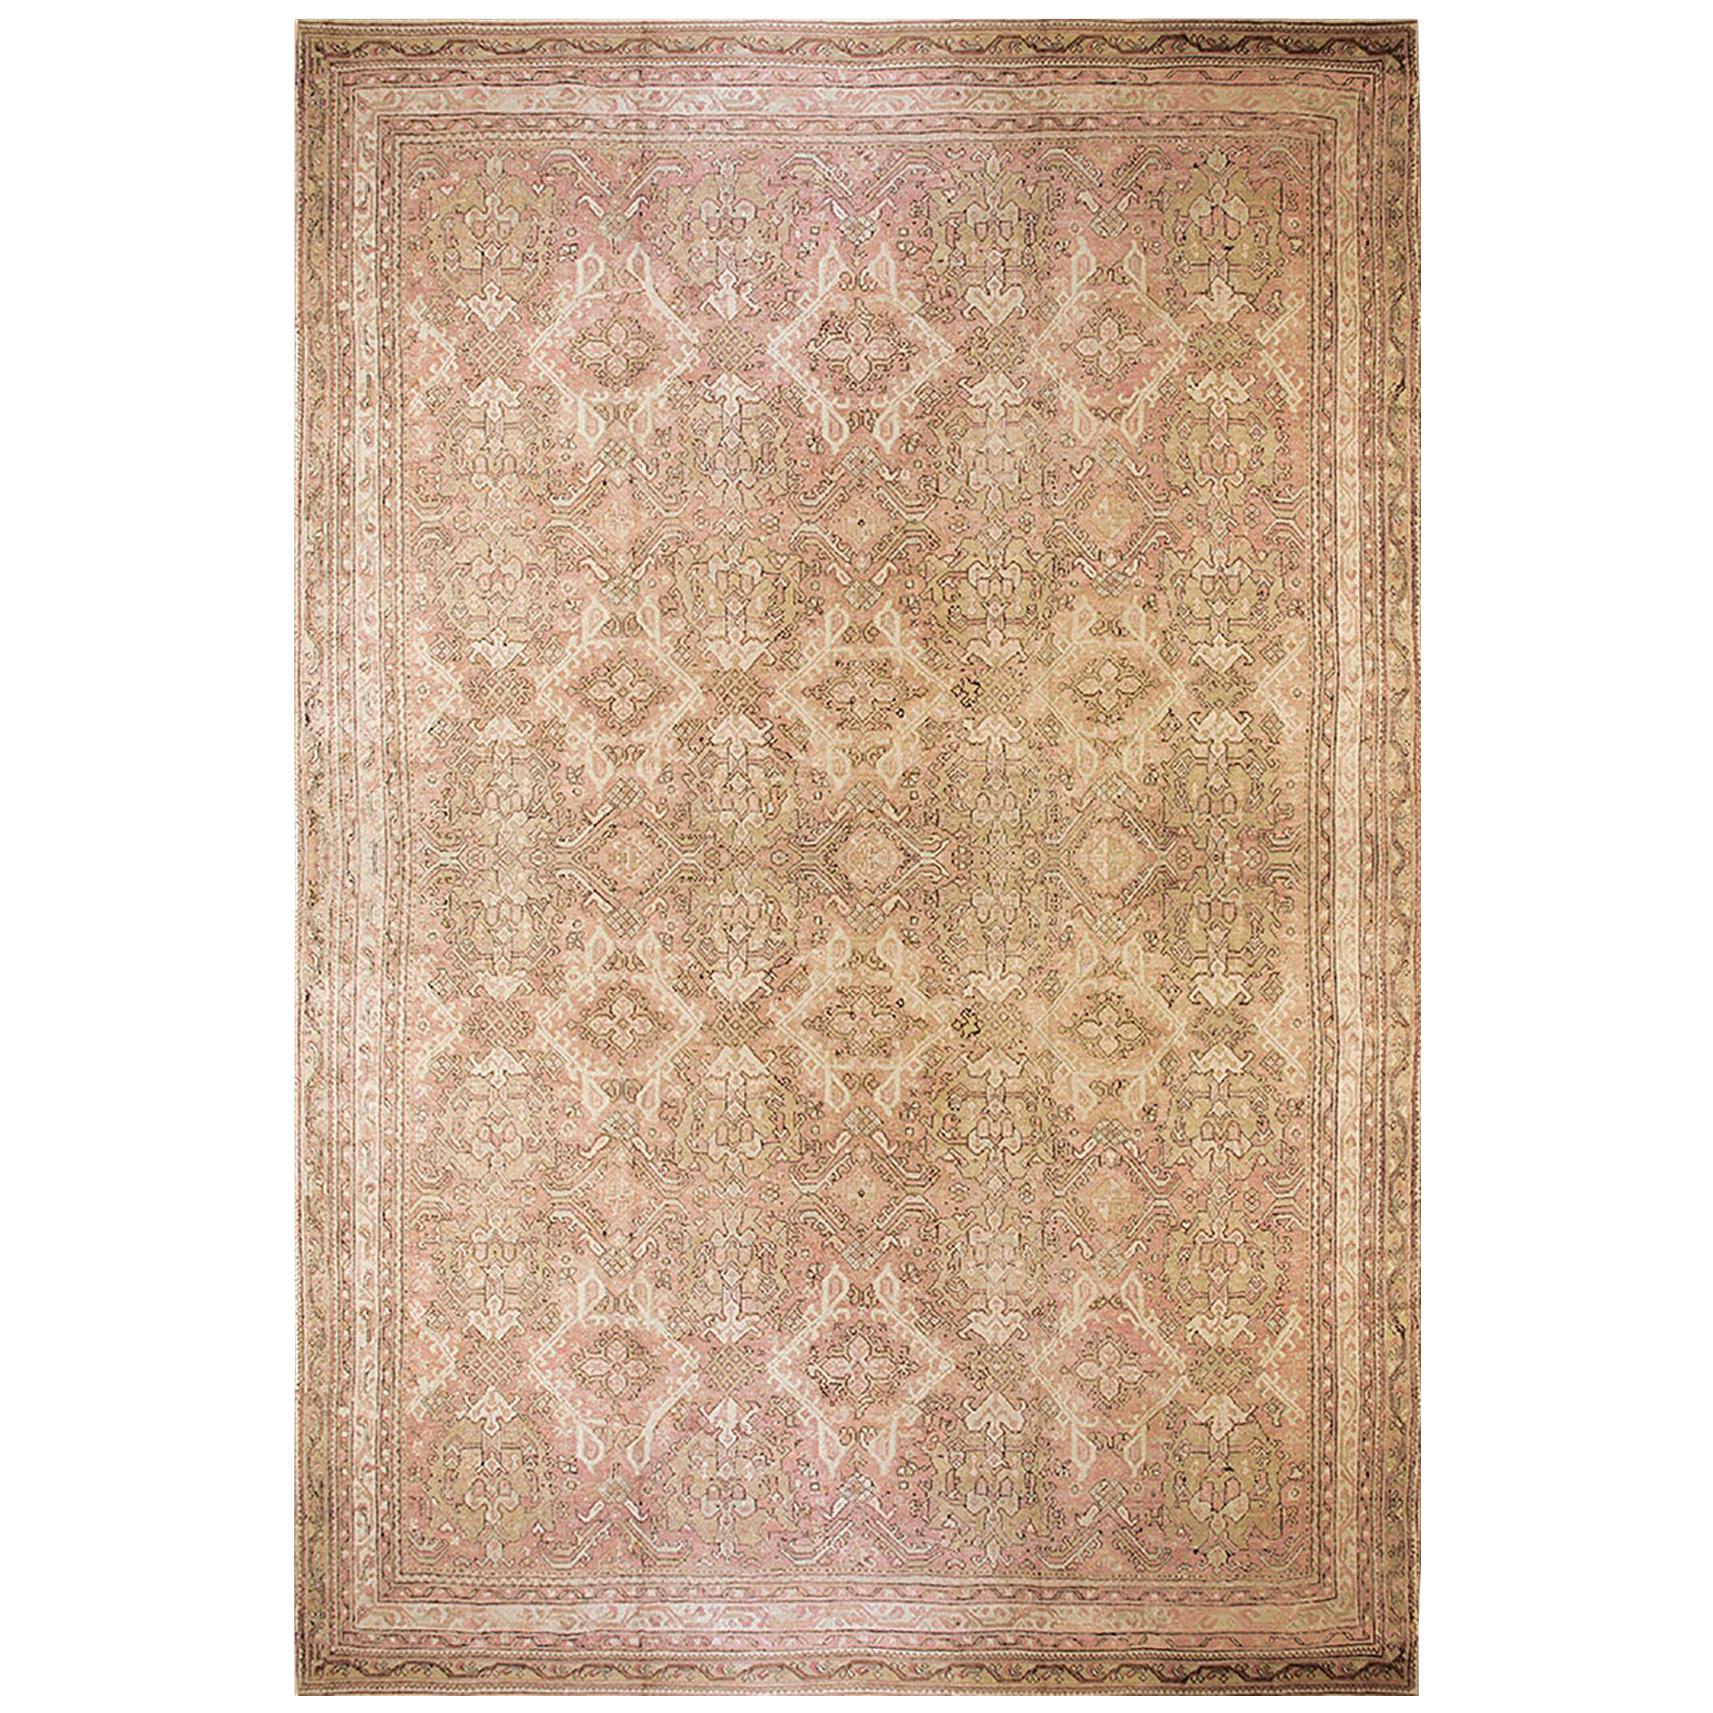 „Smyrna“-Teppich „ Oushak“ aus dem 19. Jahrhundert ( 15'6'" x 23'6" - 472 x 716)